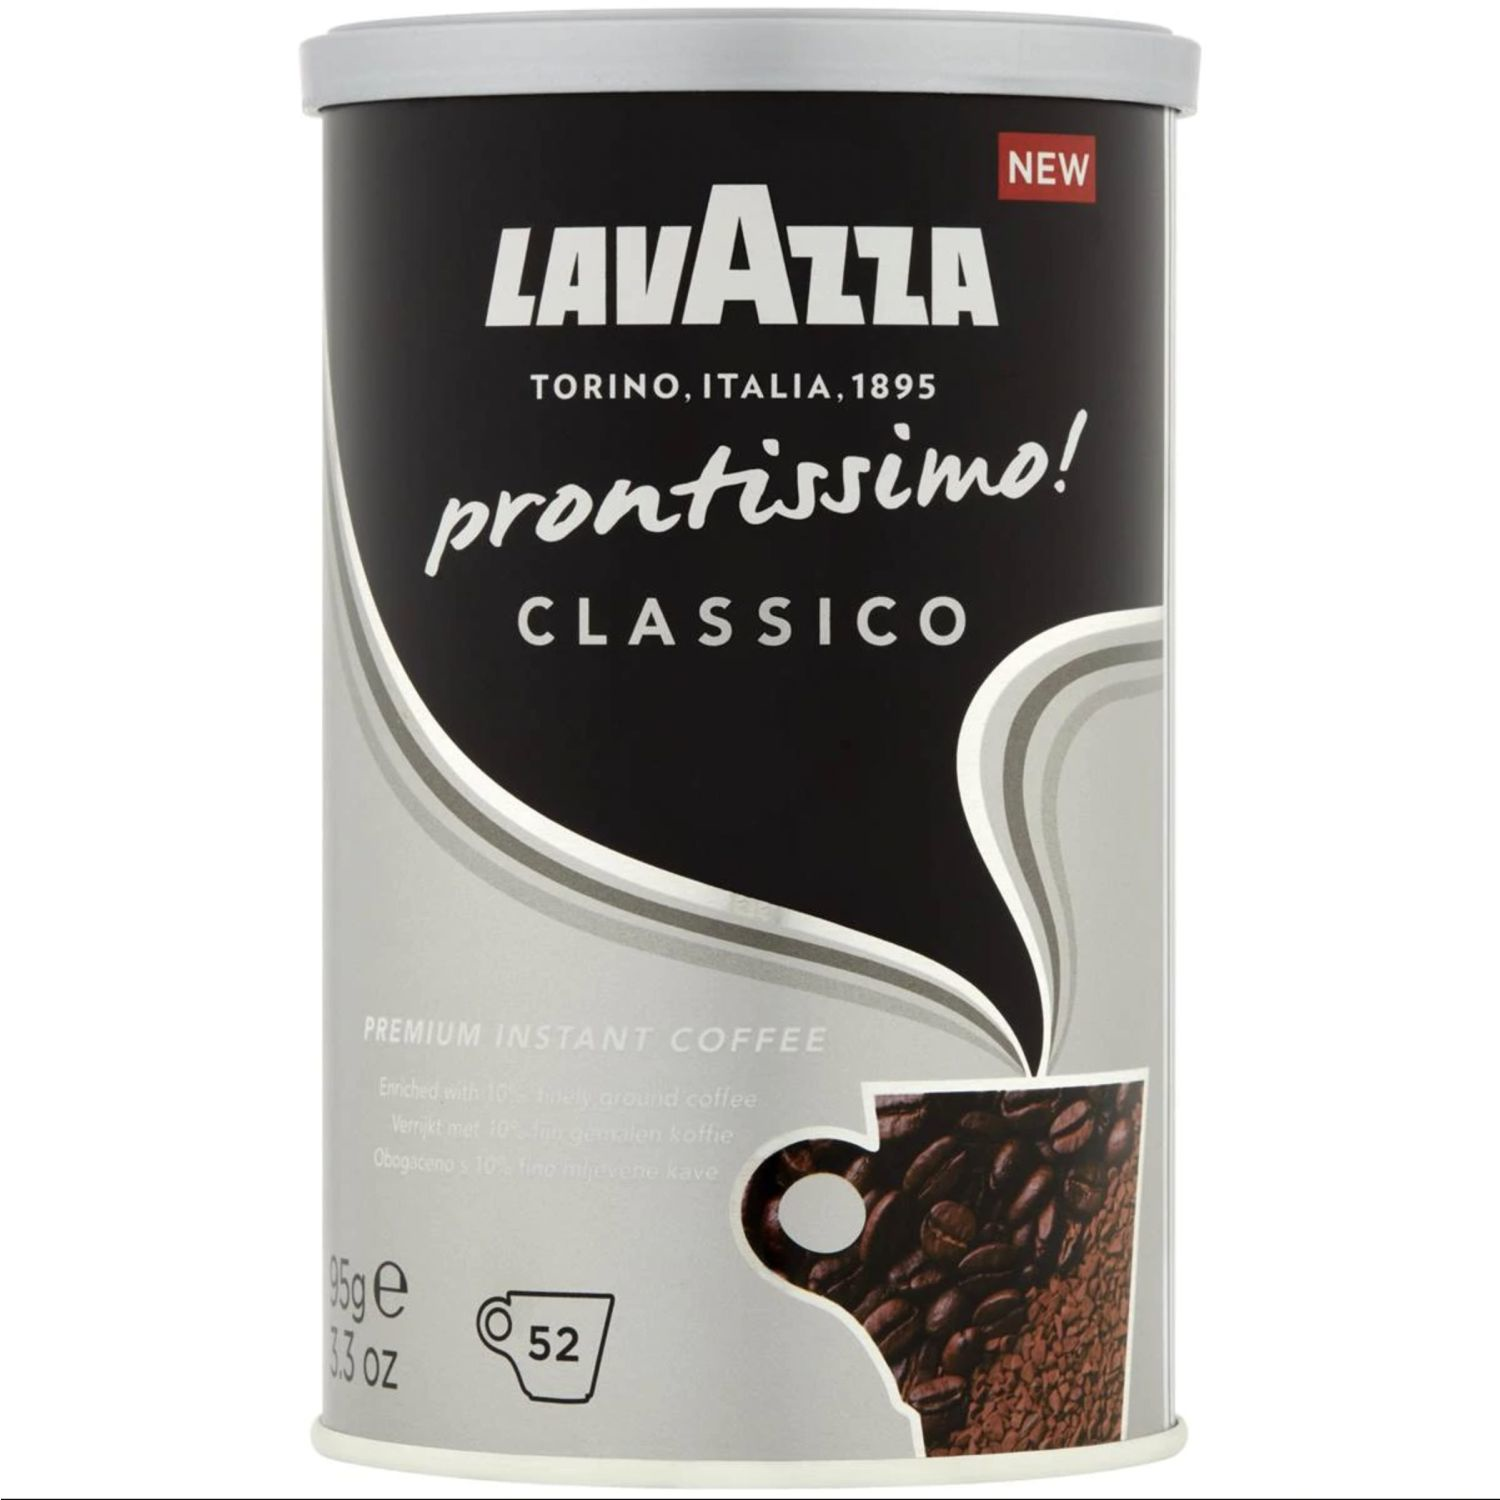 Lavazza Prontissimo Classico Premium Instant Coffee, 95 Gram